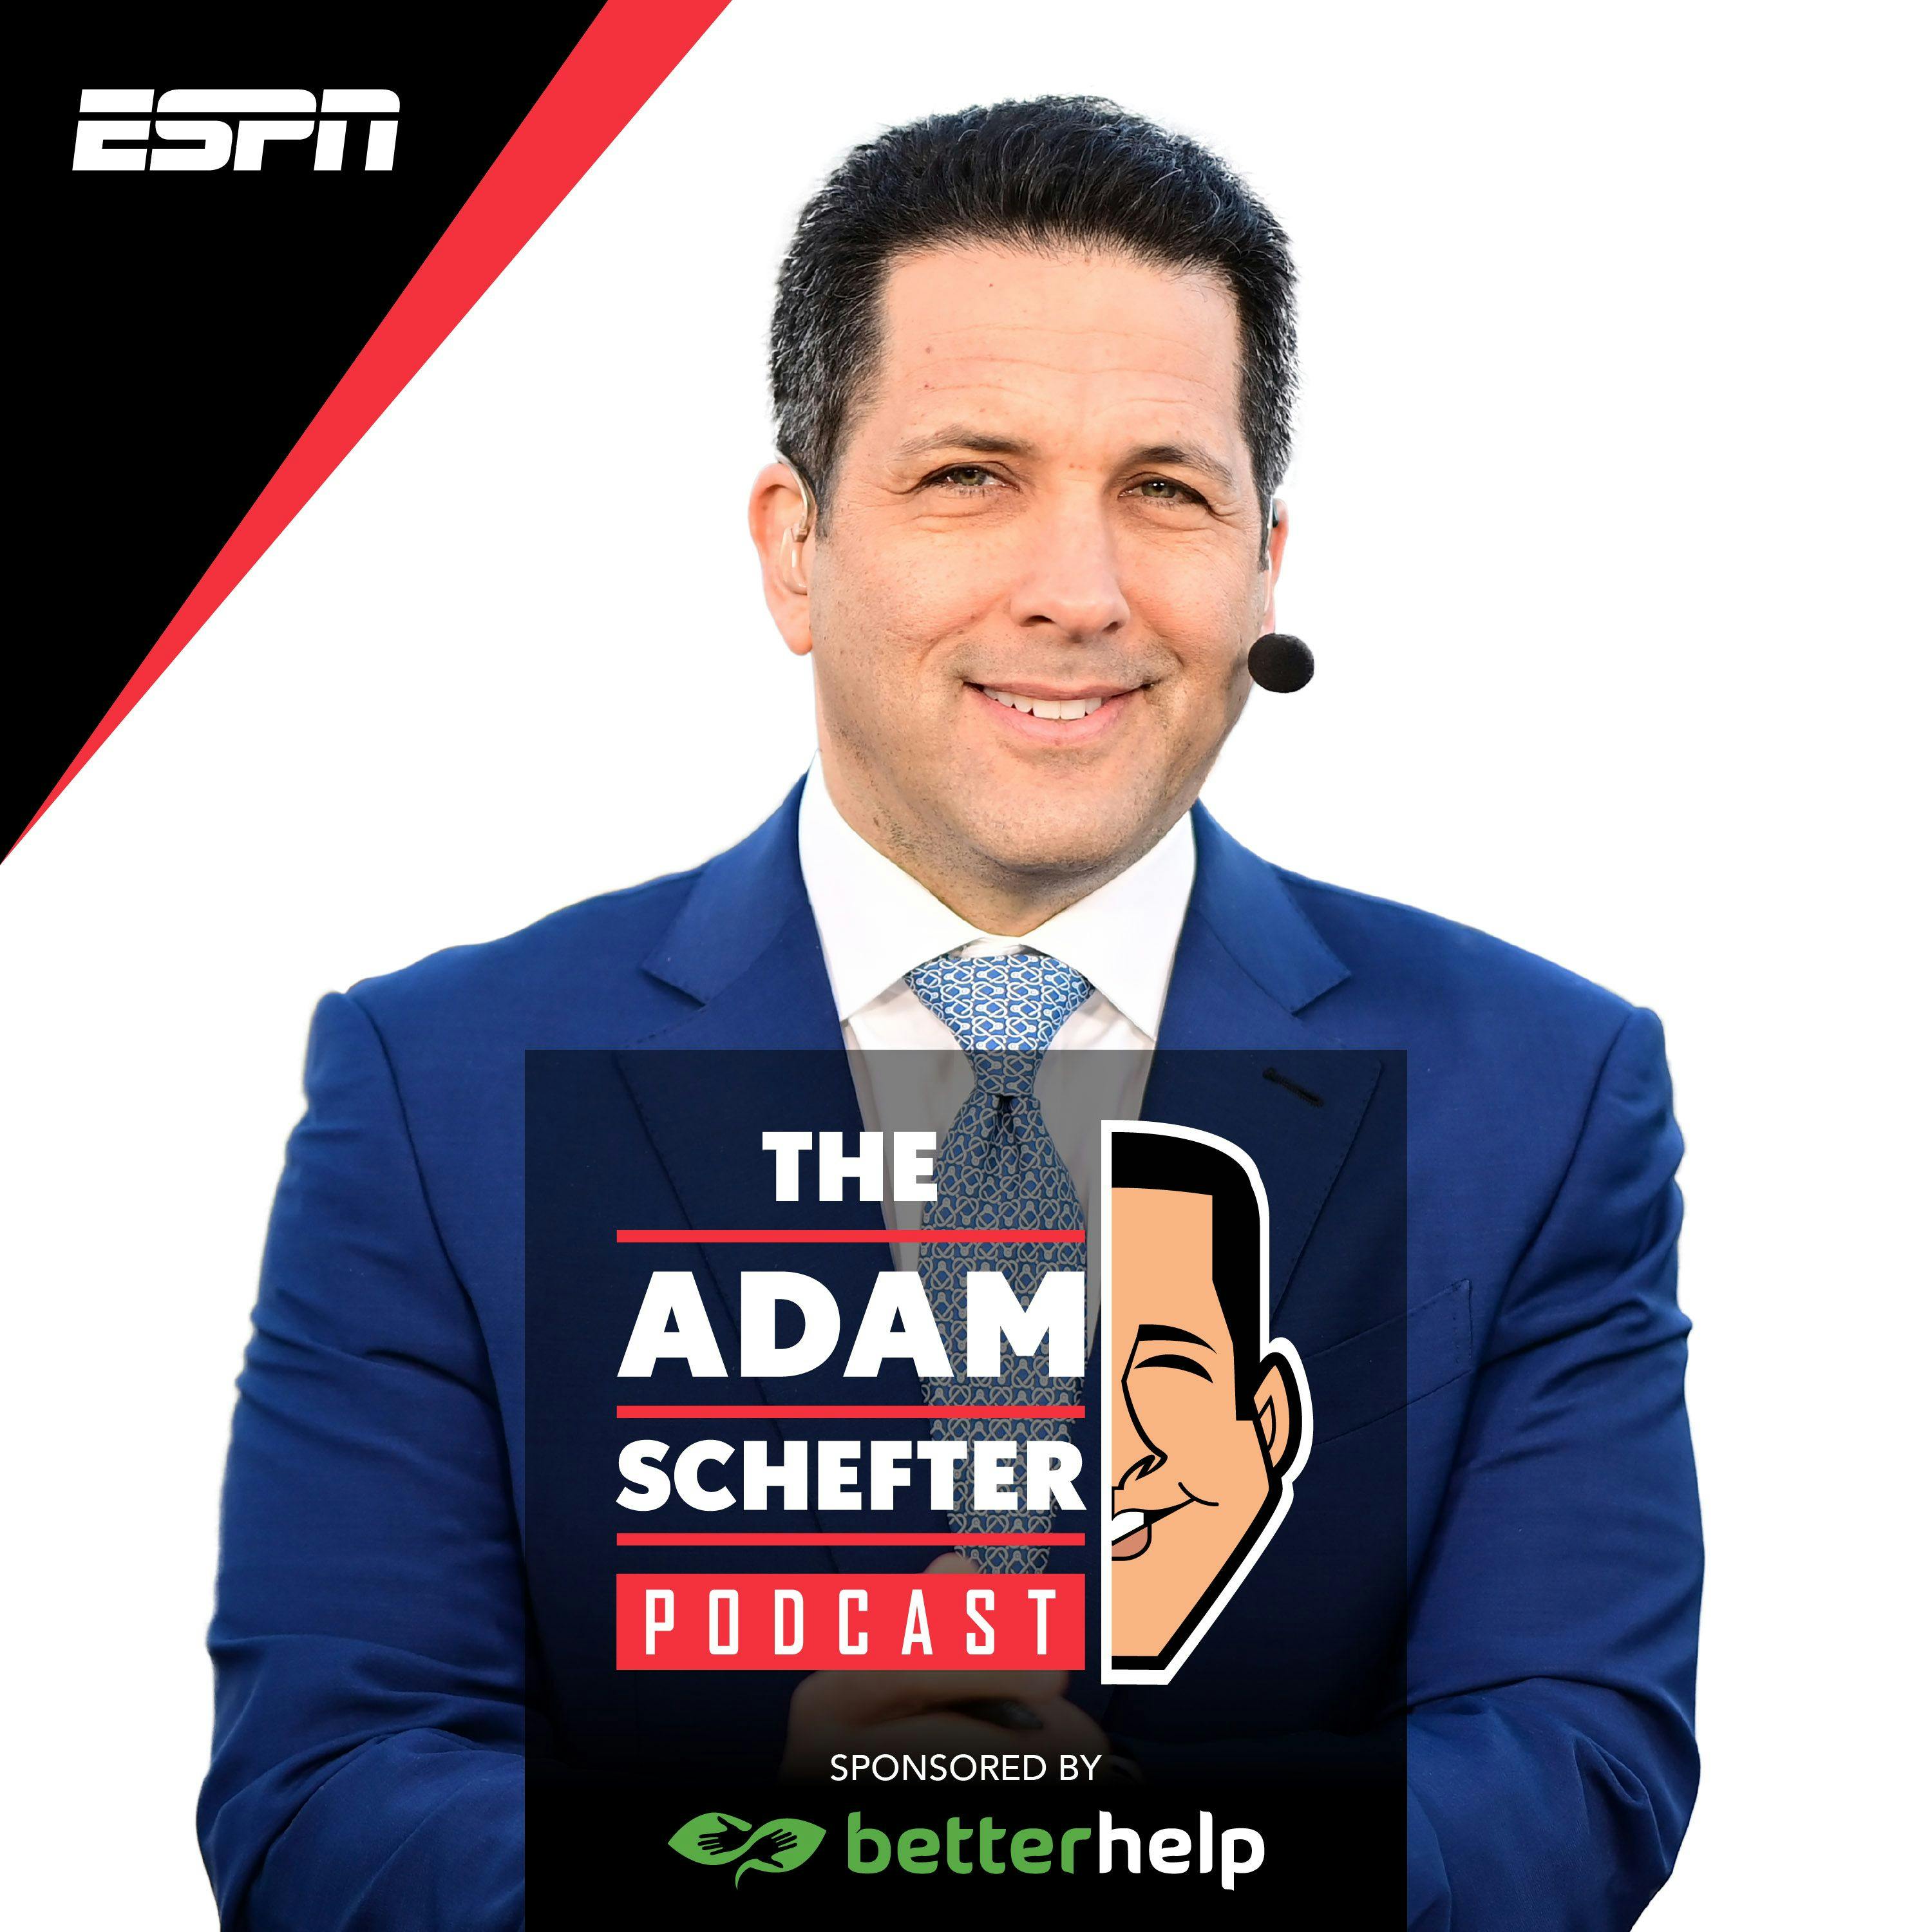 The Adam Schefter Podcast podcast